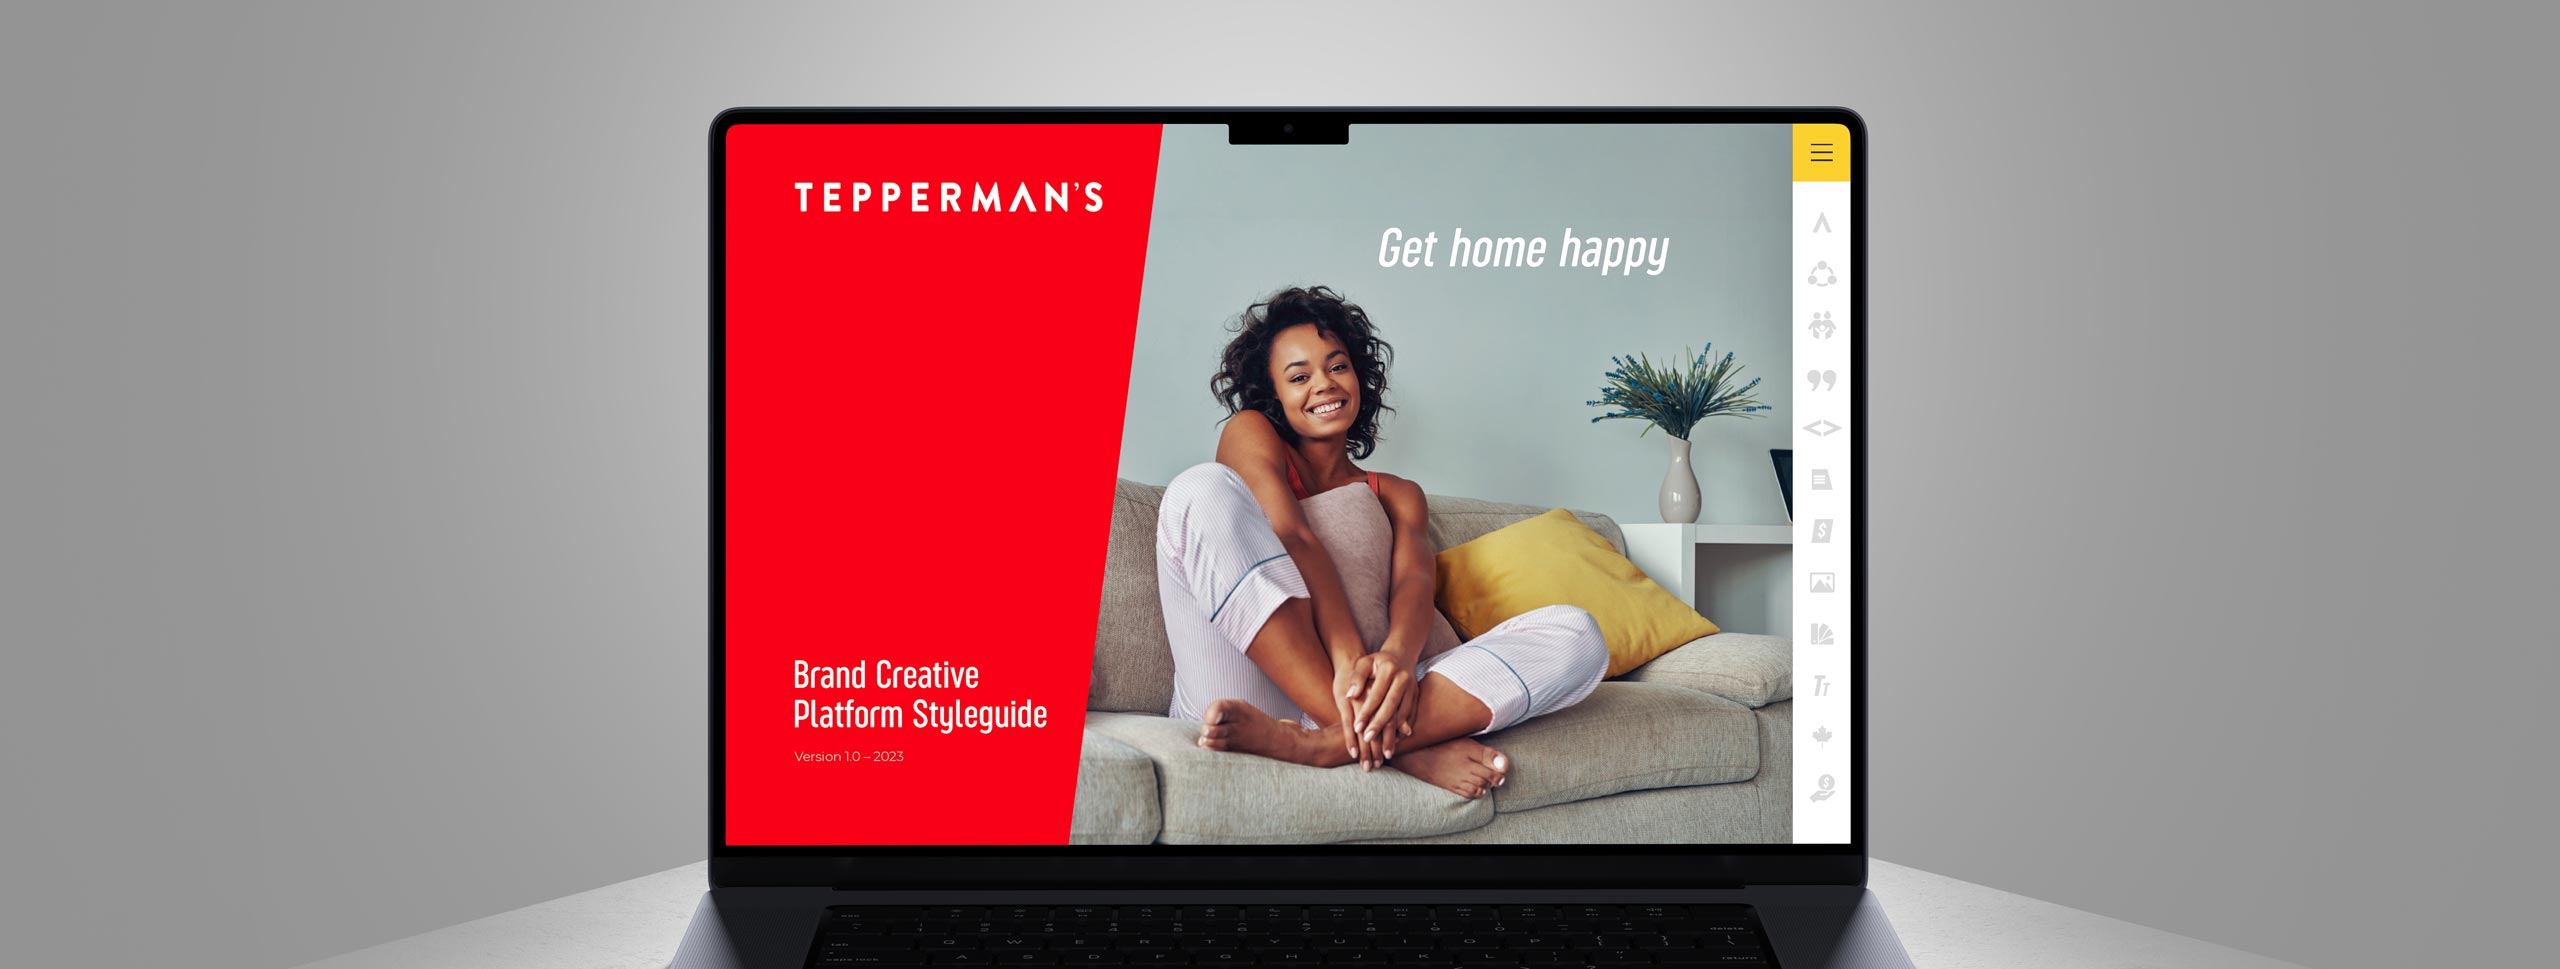 Tepperman’s Brand platform - Yield Branding - Hero Image 2